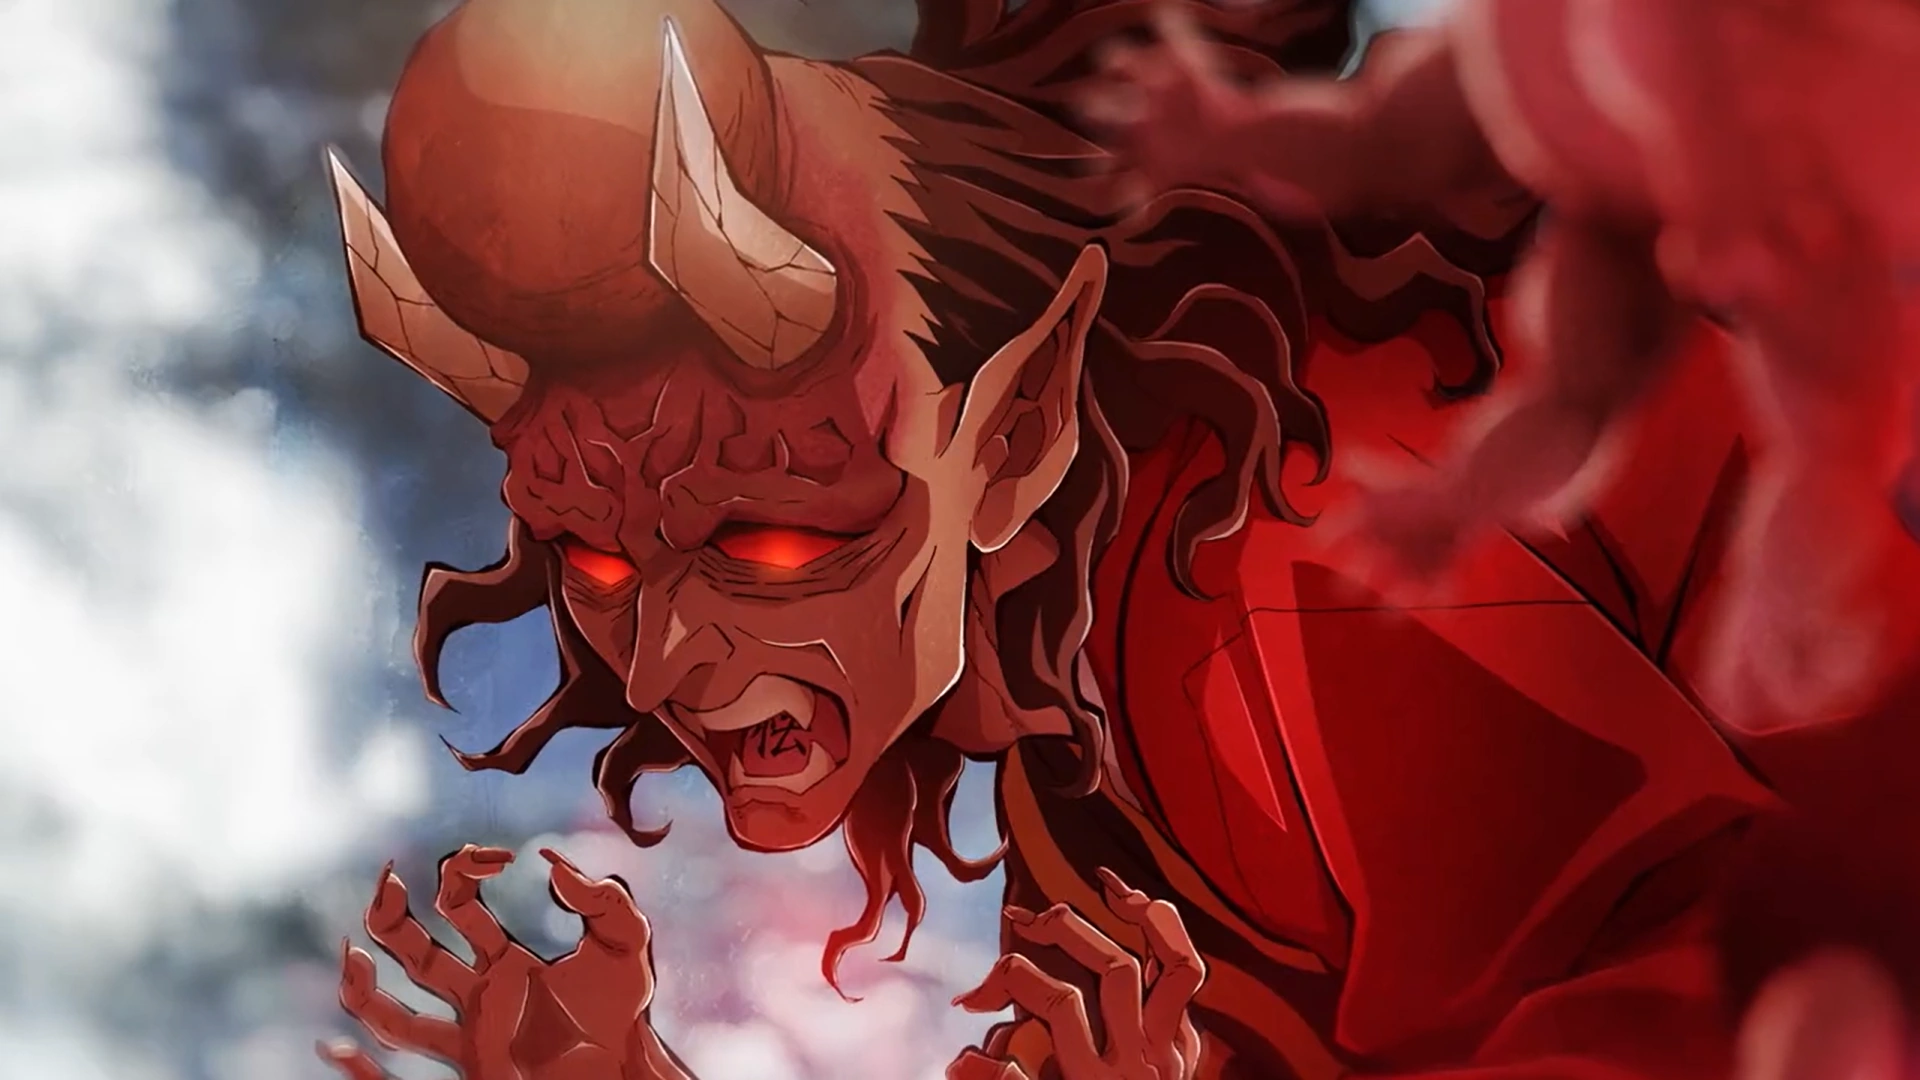 Demon Slayer demons ranked: Who is the strongest of the Twelve Kizuki?